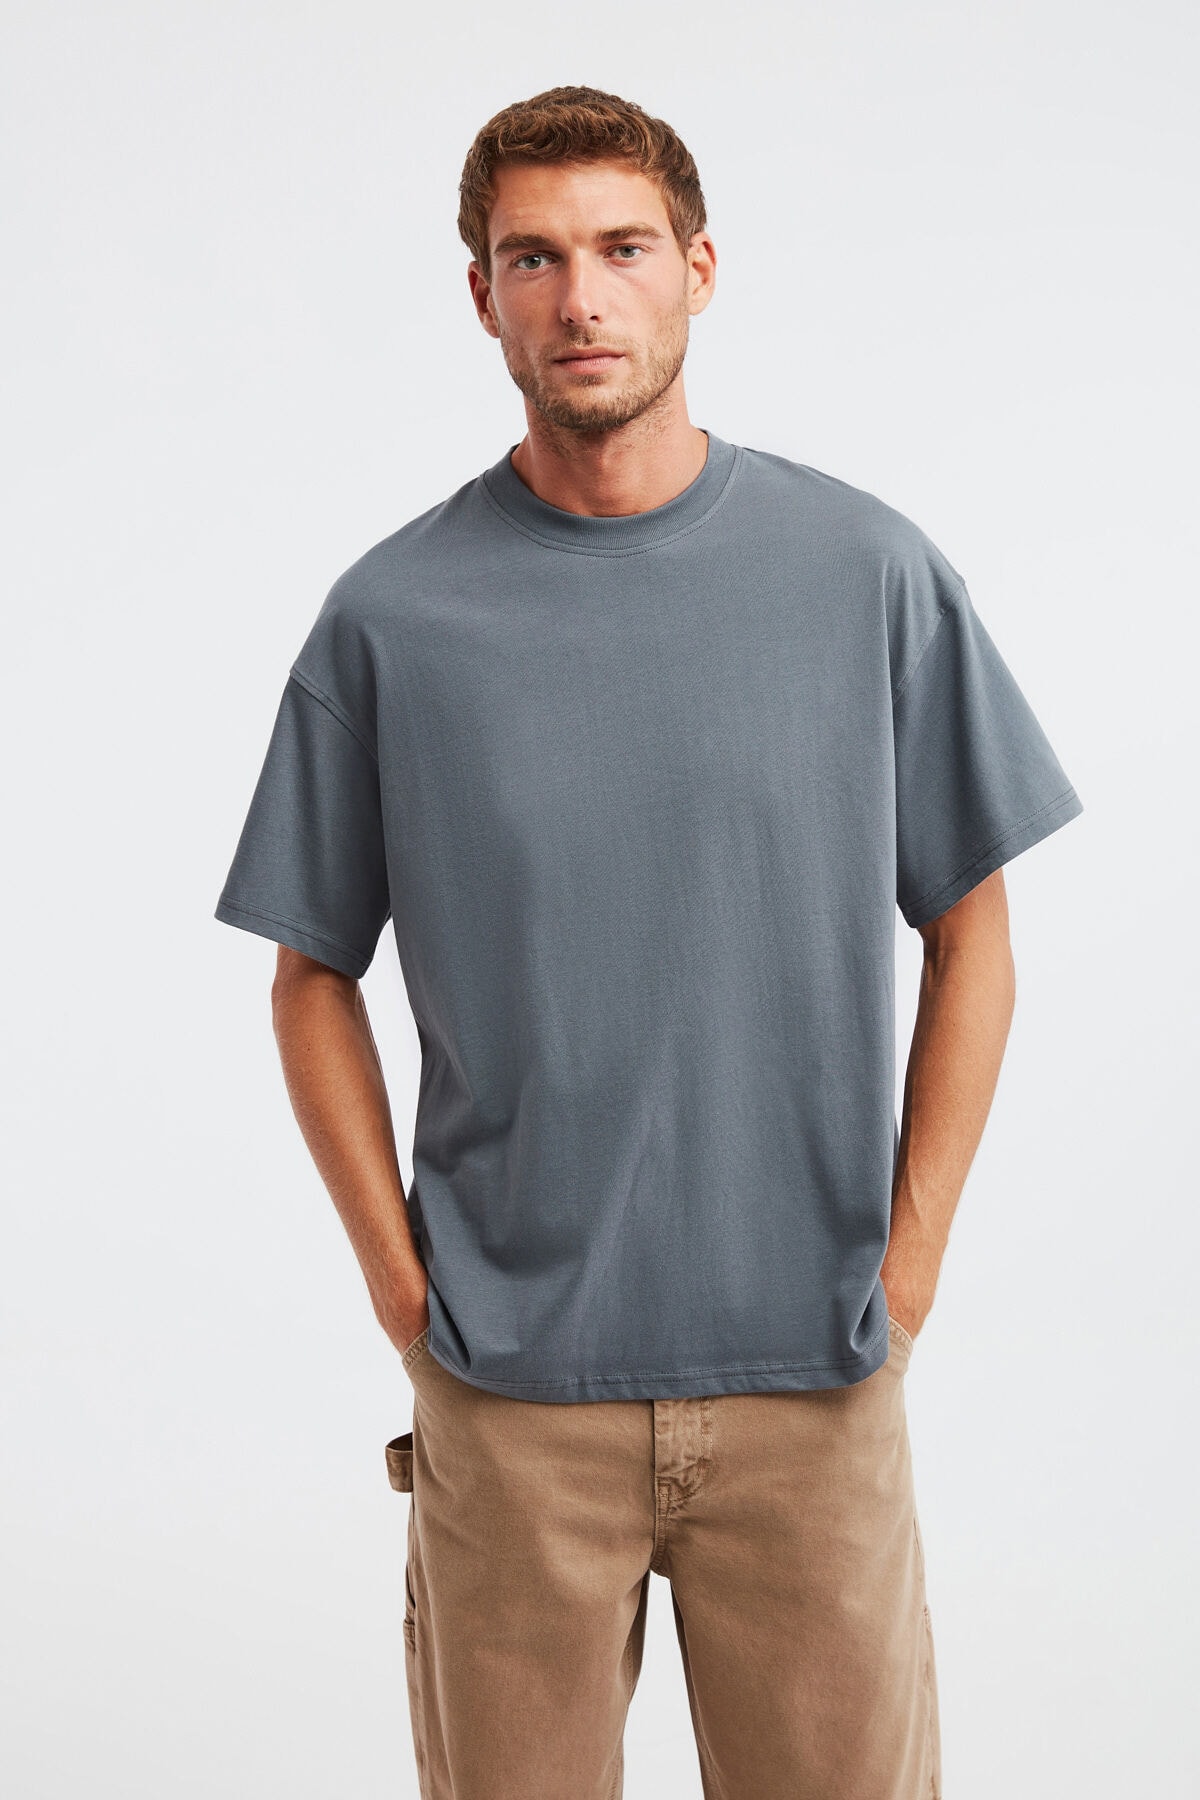 GRIMELANGE Jett Men's Oversize Fit 100% Cotton Thick Textured Light Gray T-shirt